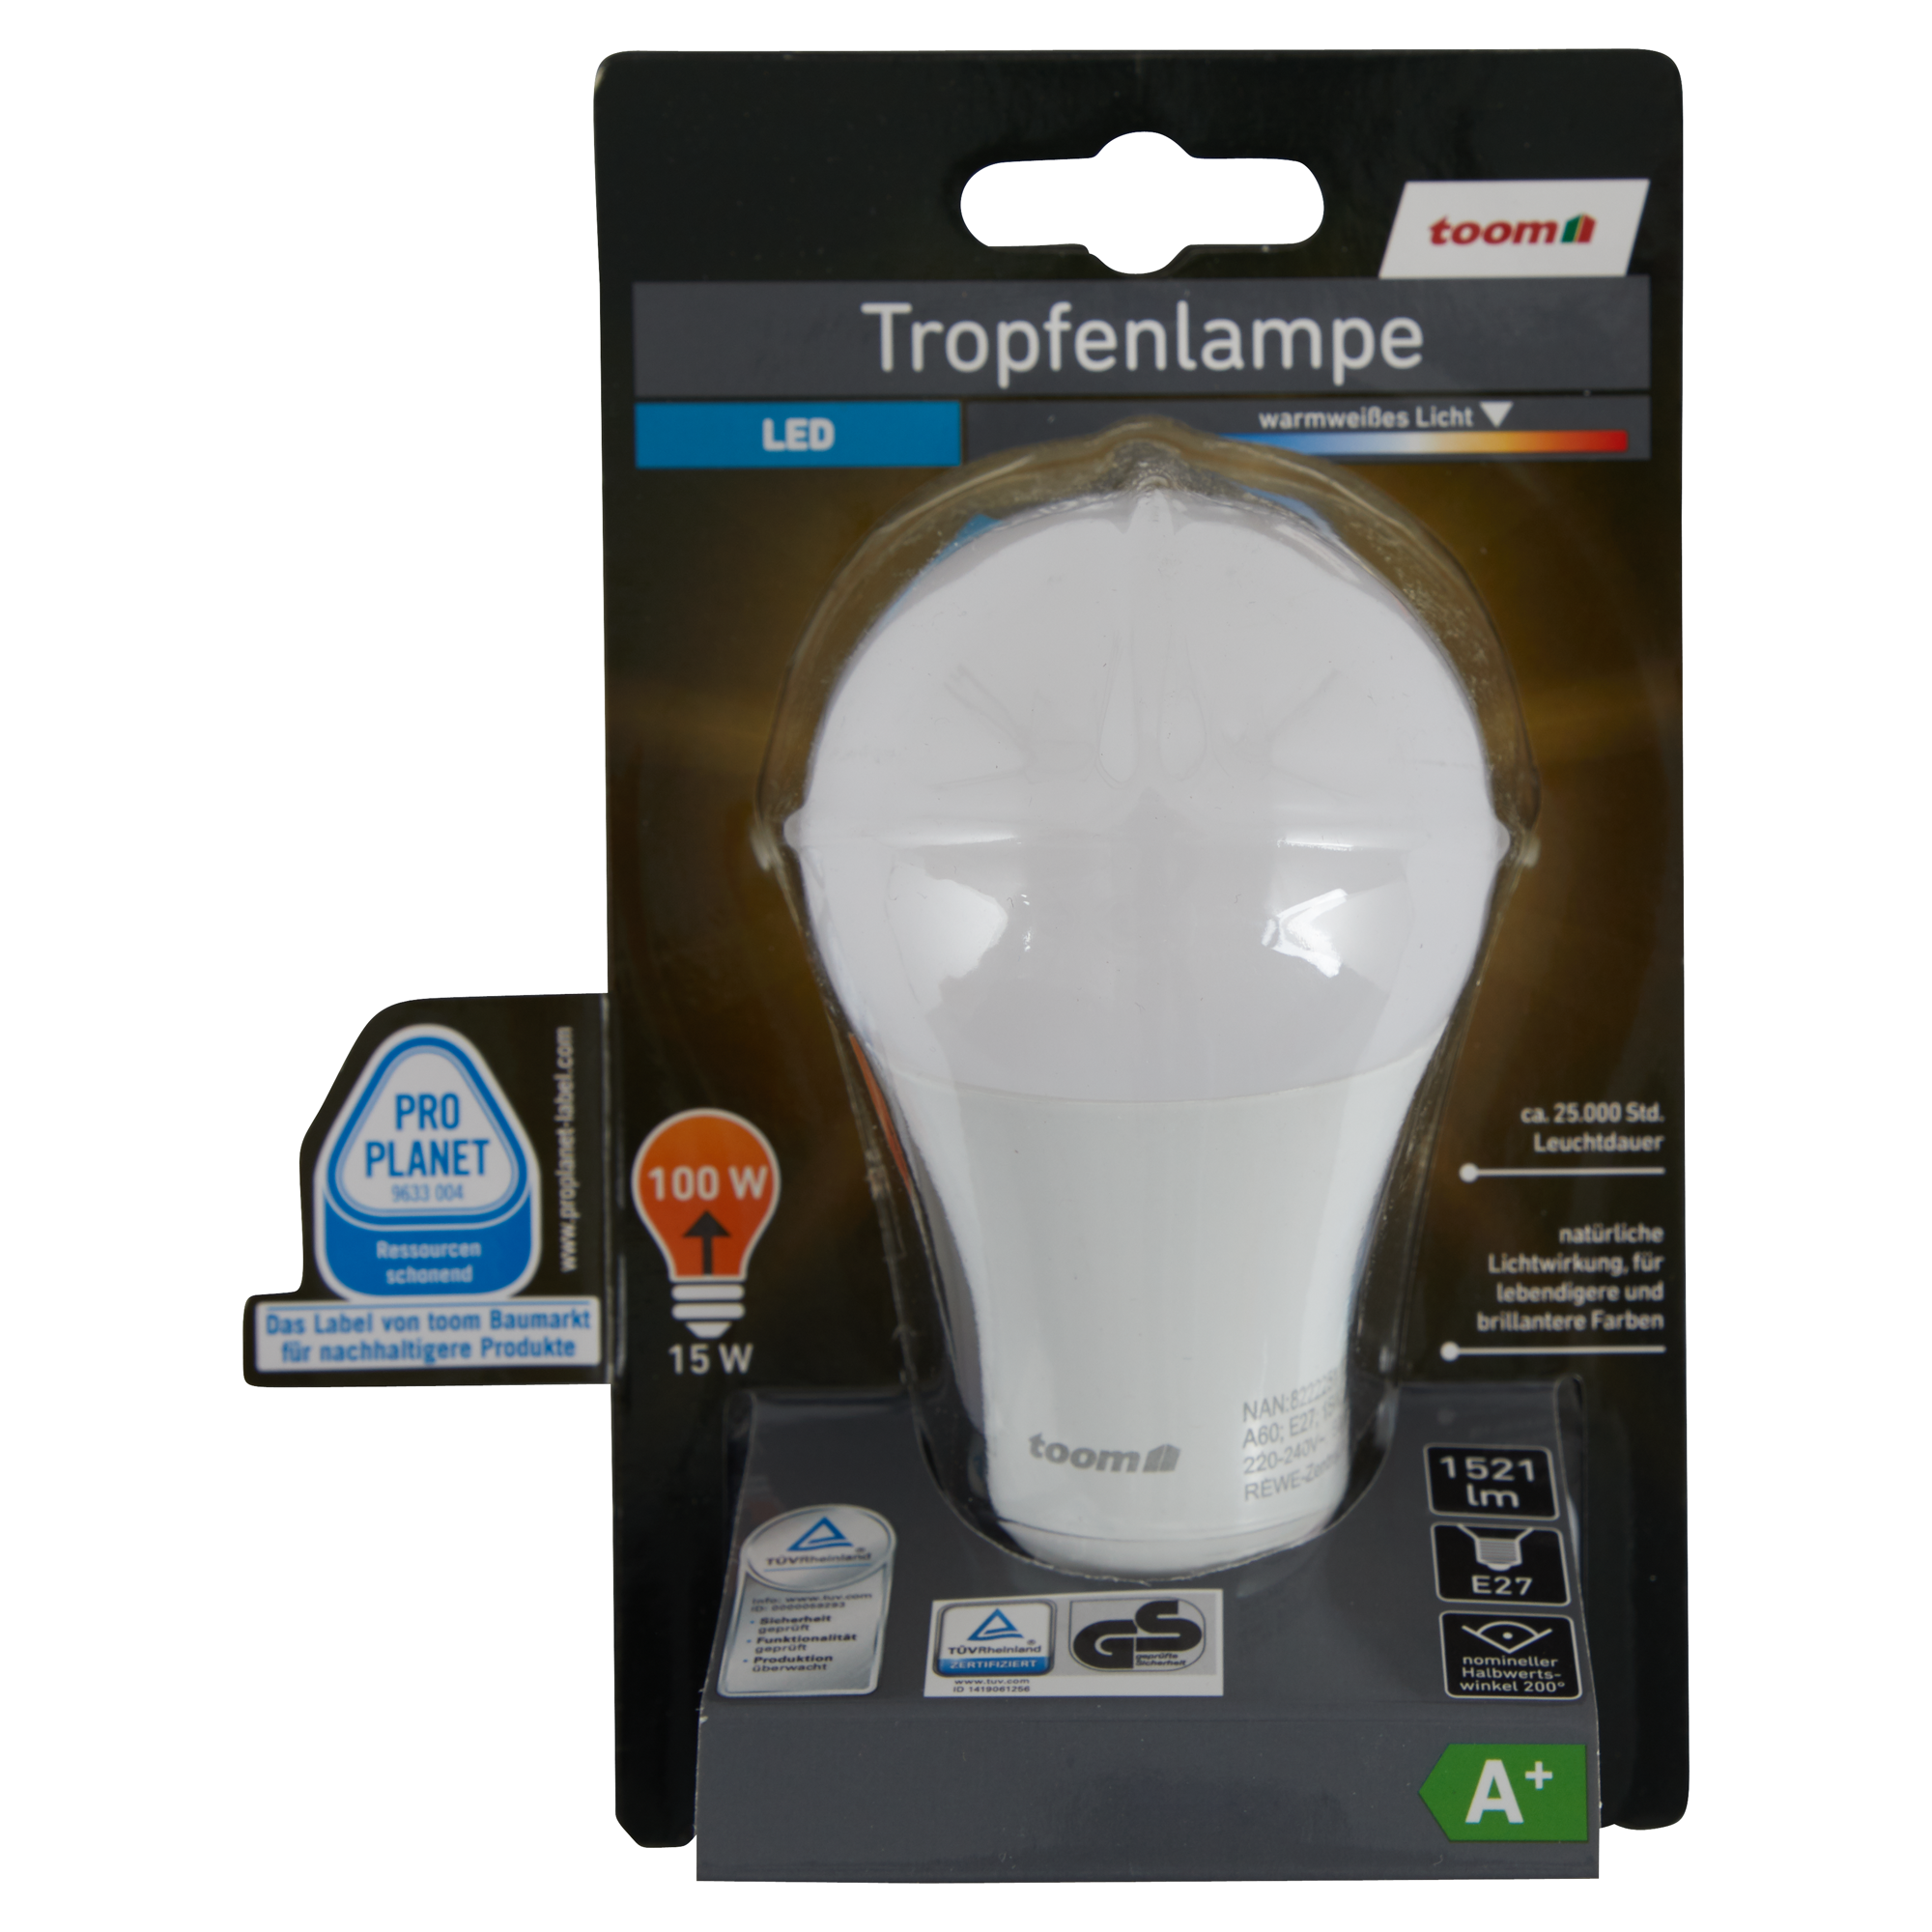 toom LED-Tropfenlampe E27 1521 lm 15 W warmweiß